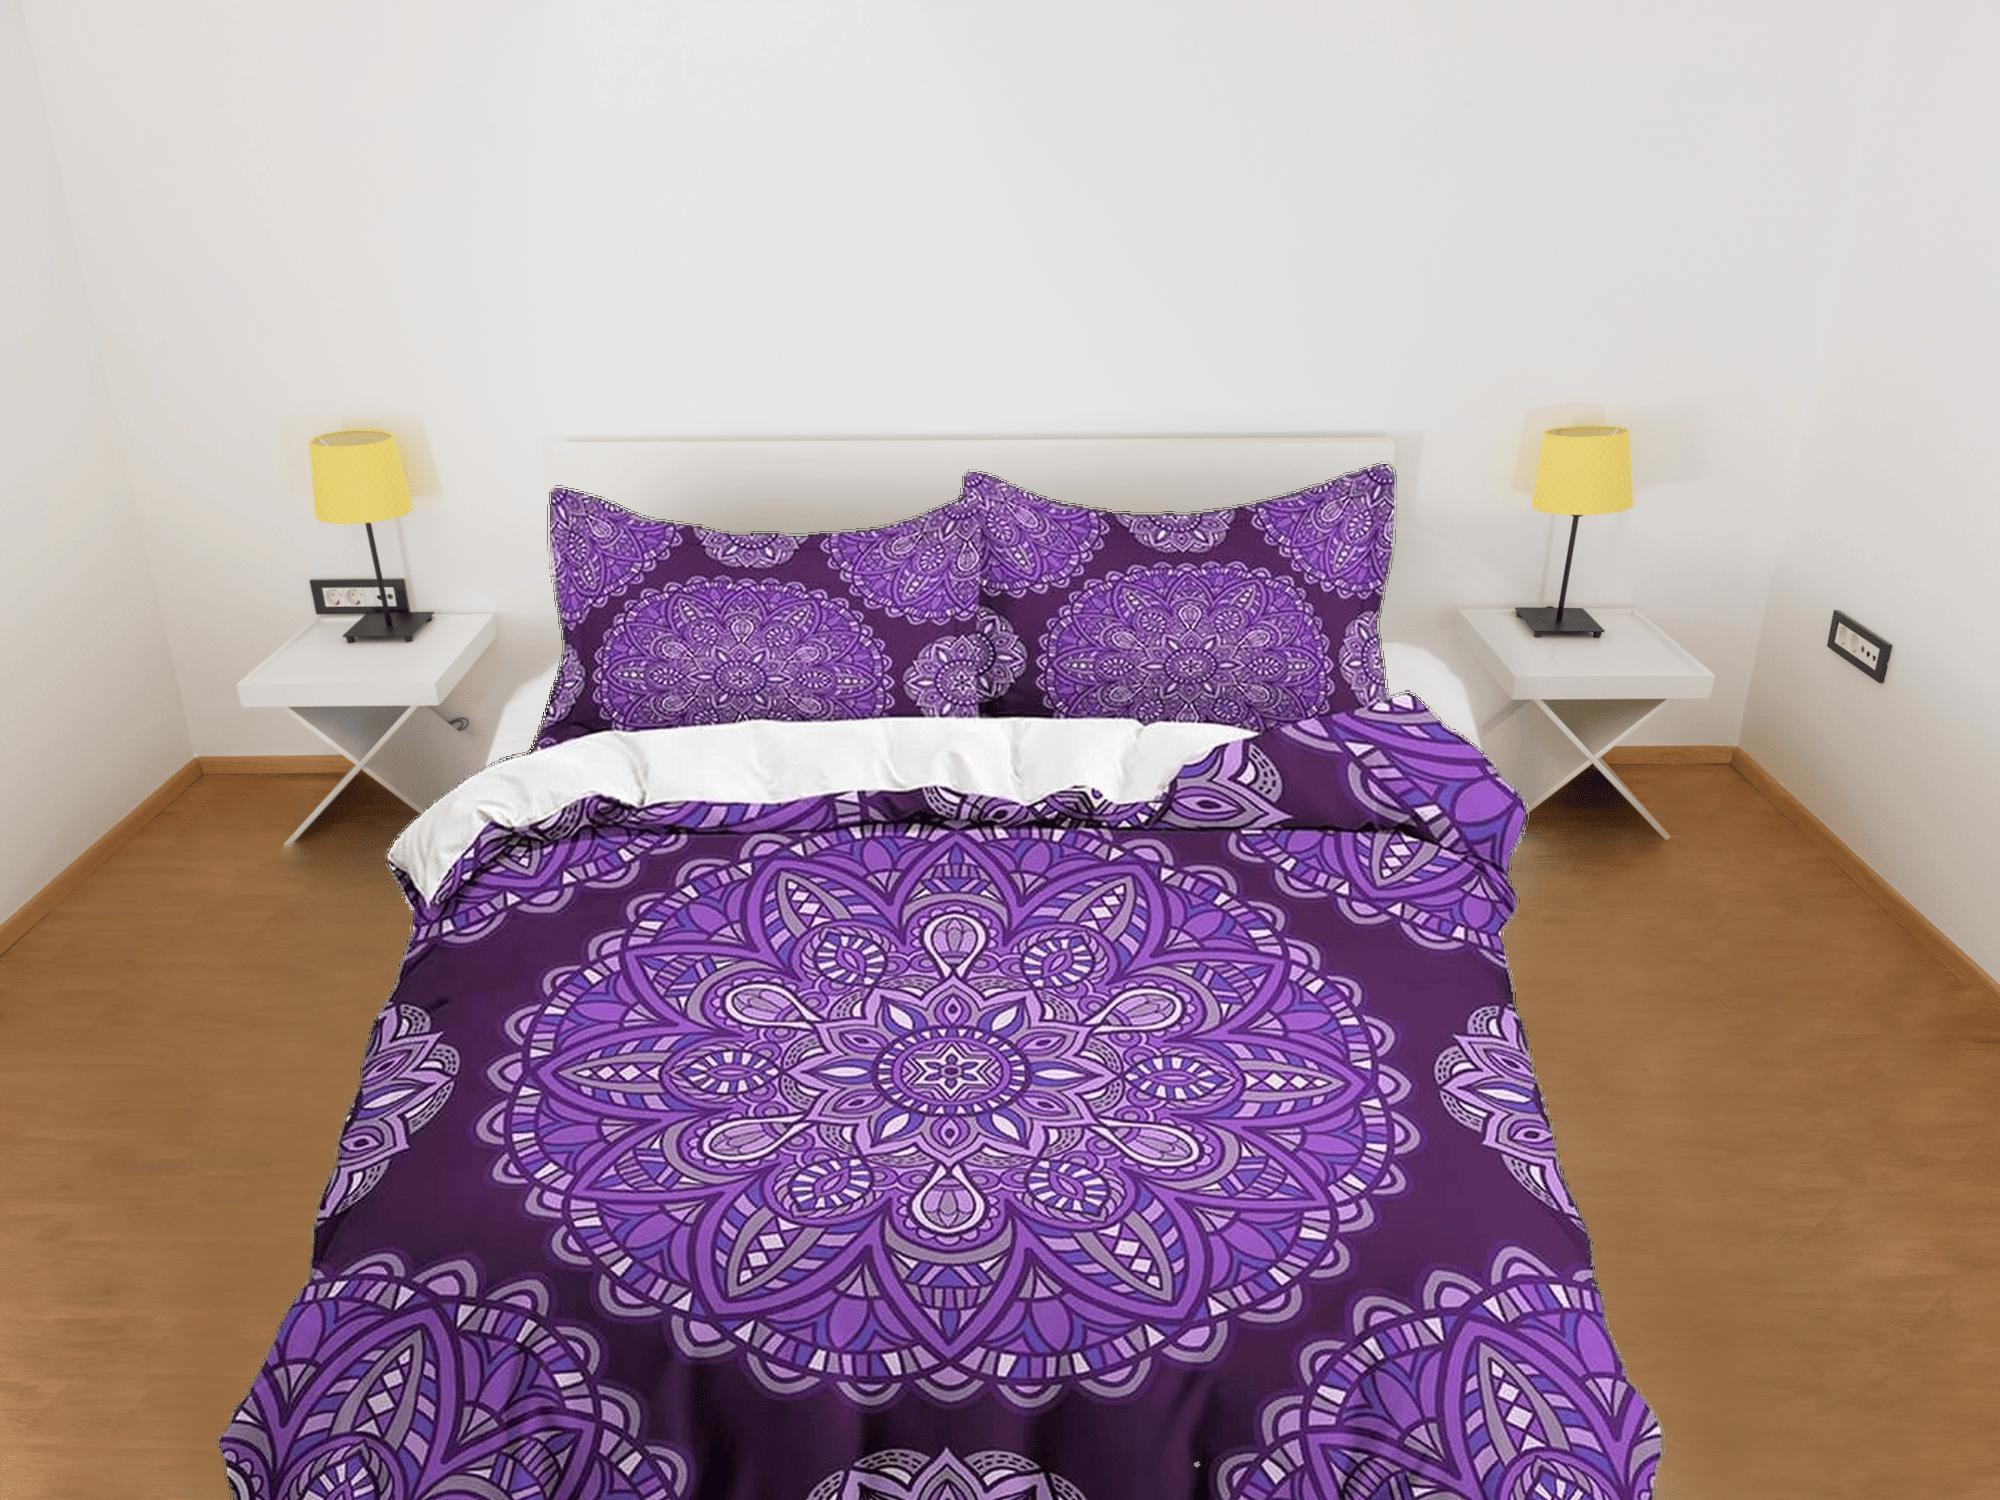 daintyduvet Purple mandala violet duvet cover boho bedding set full, queen, king, dorm bedding, aesthetic room decor indian bedspread maximalist decor